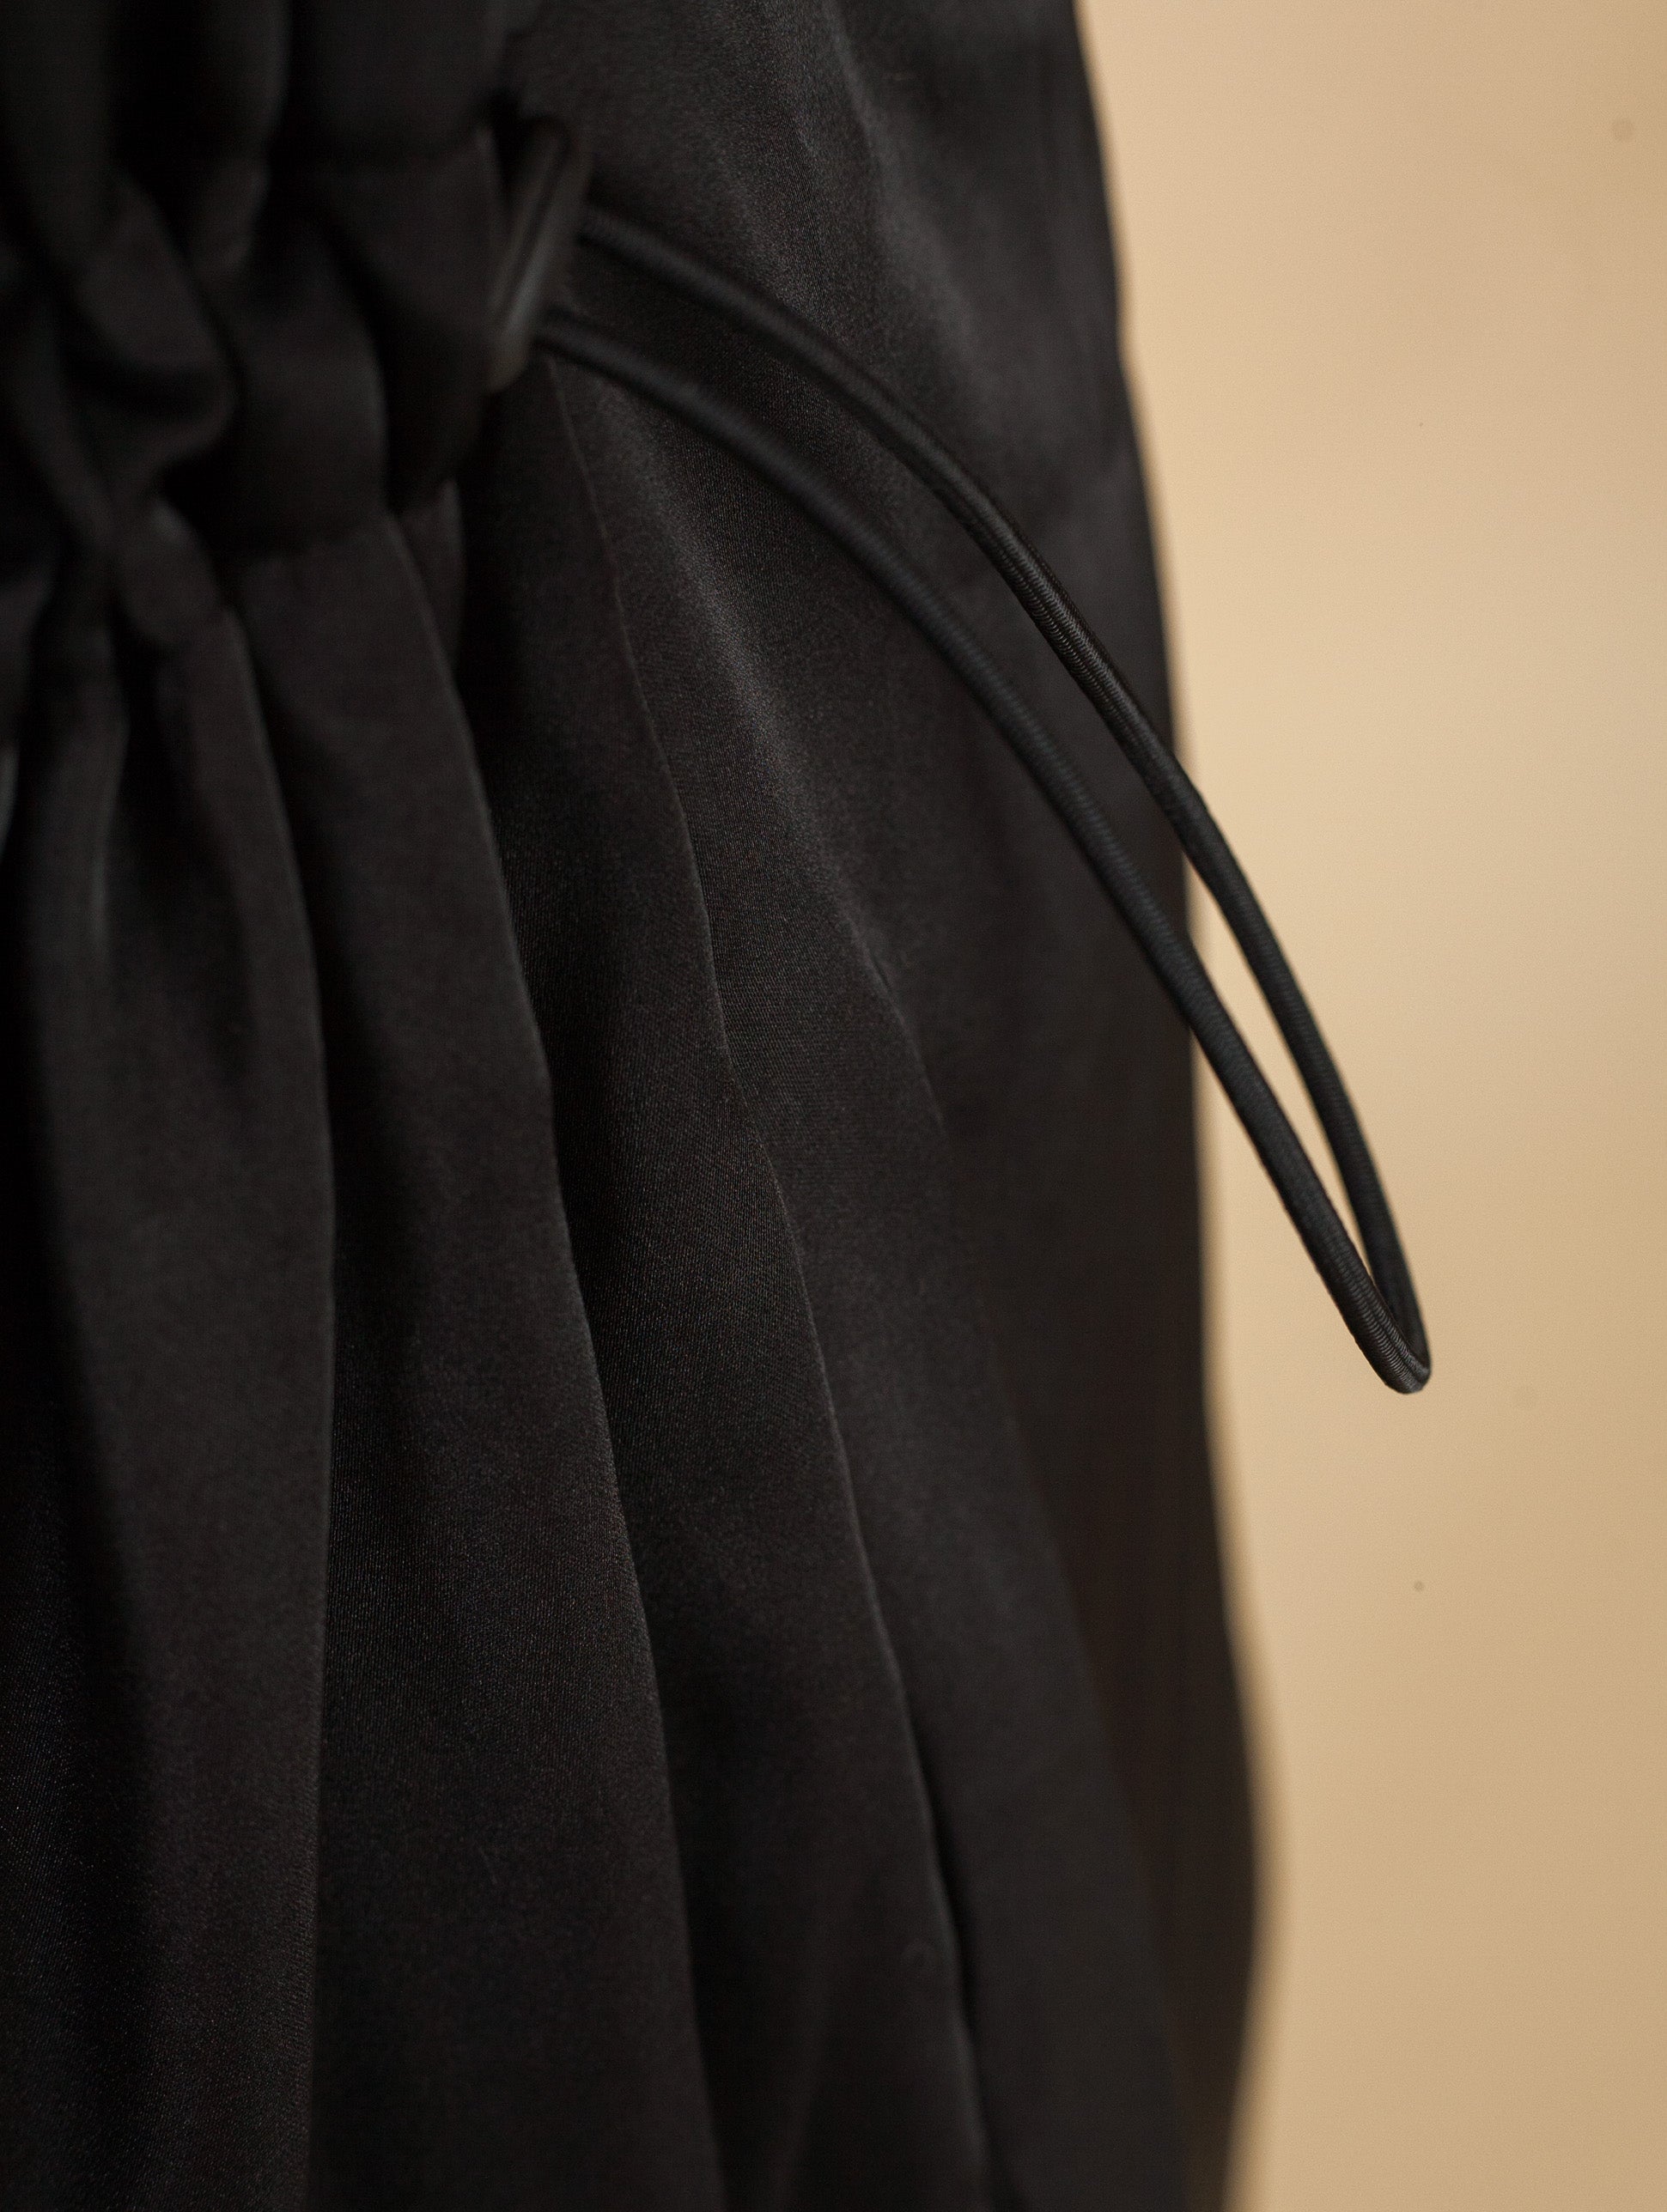 Halter Dress Satin (Black)